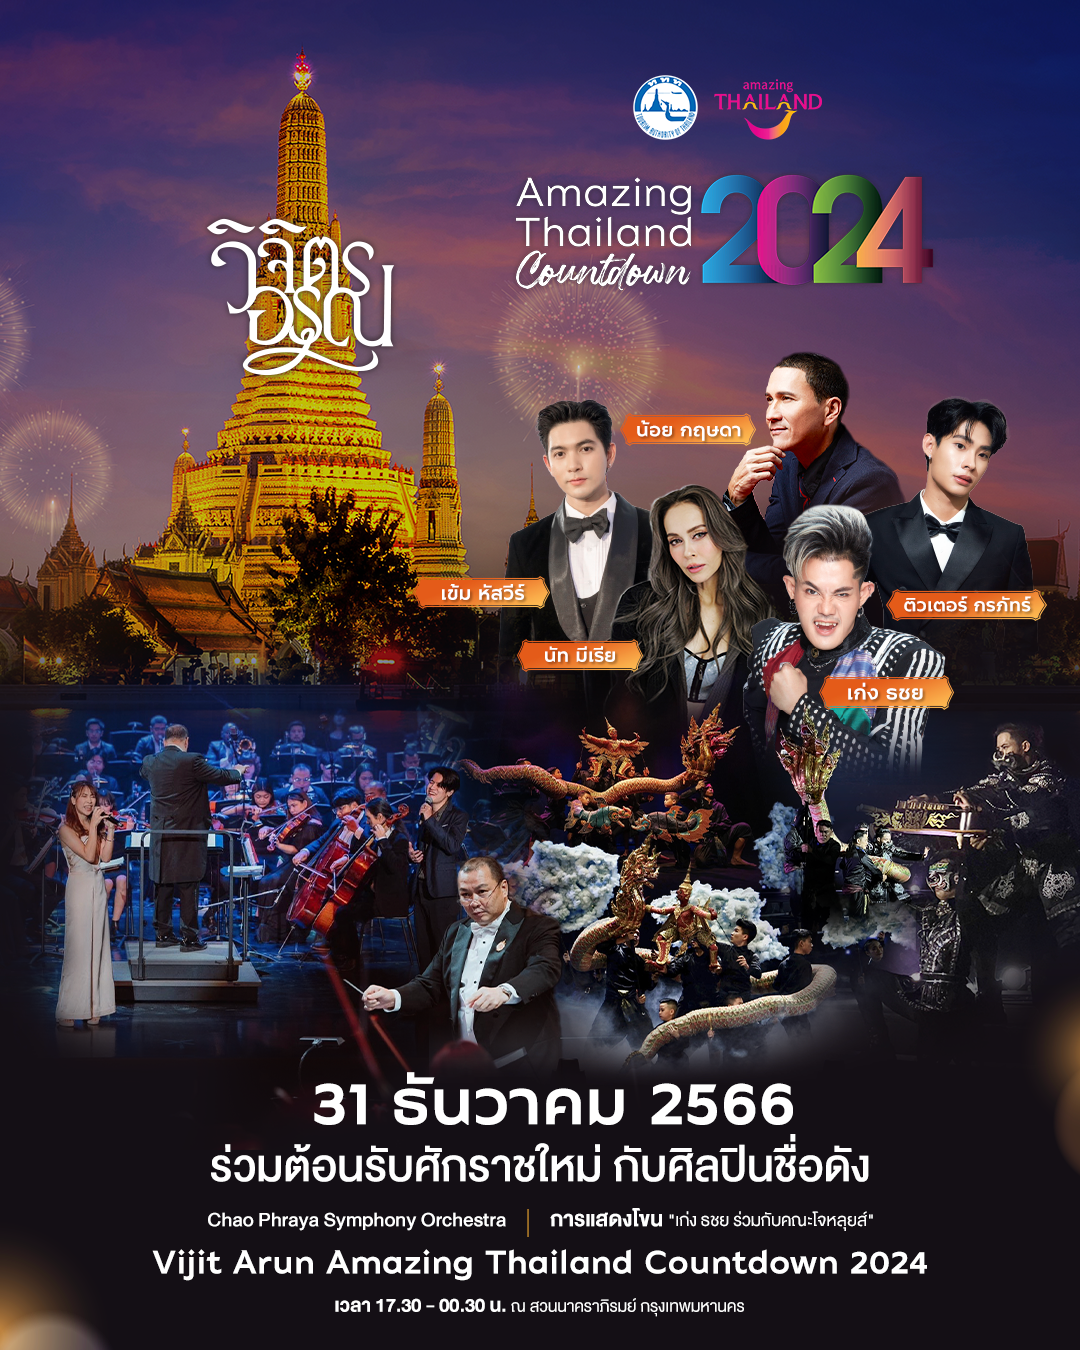 Amazing Thailand Countdown 2024 Vijit Arun